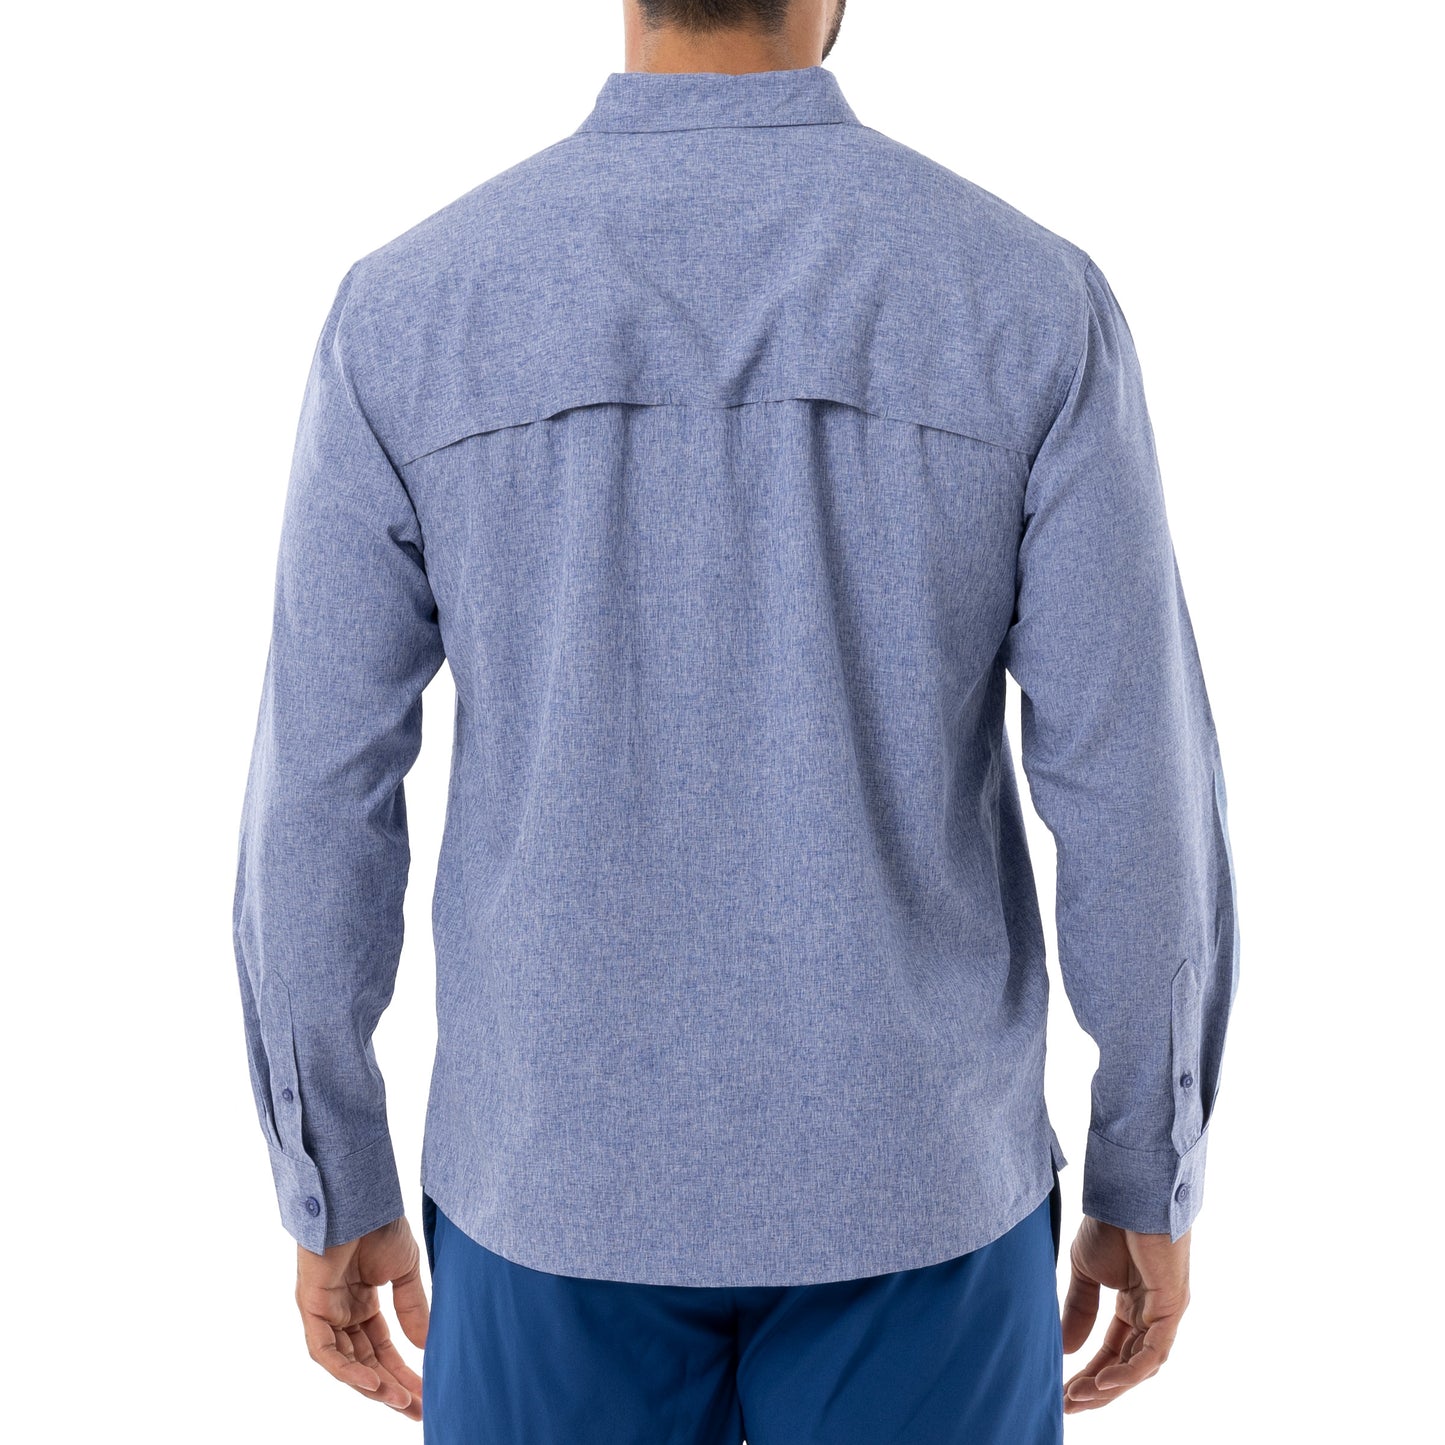 Guy Harvey Men's Long Sleeve Fishing Tee Shirt | Estate Blue - Large